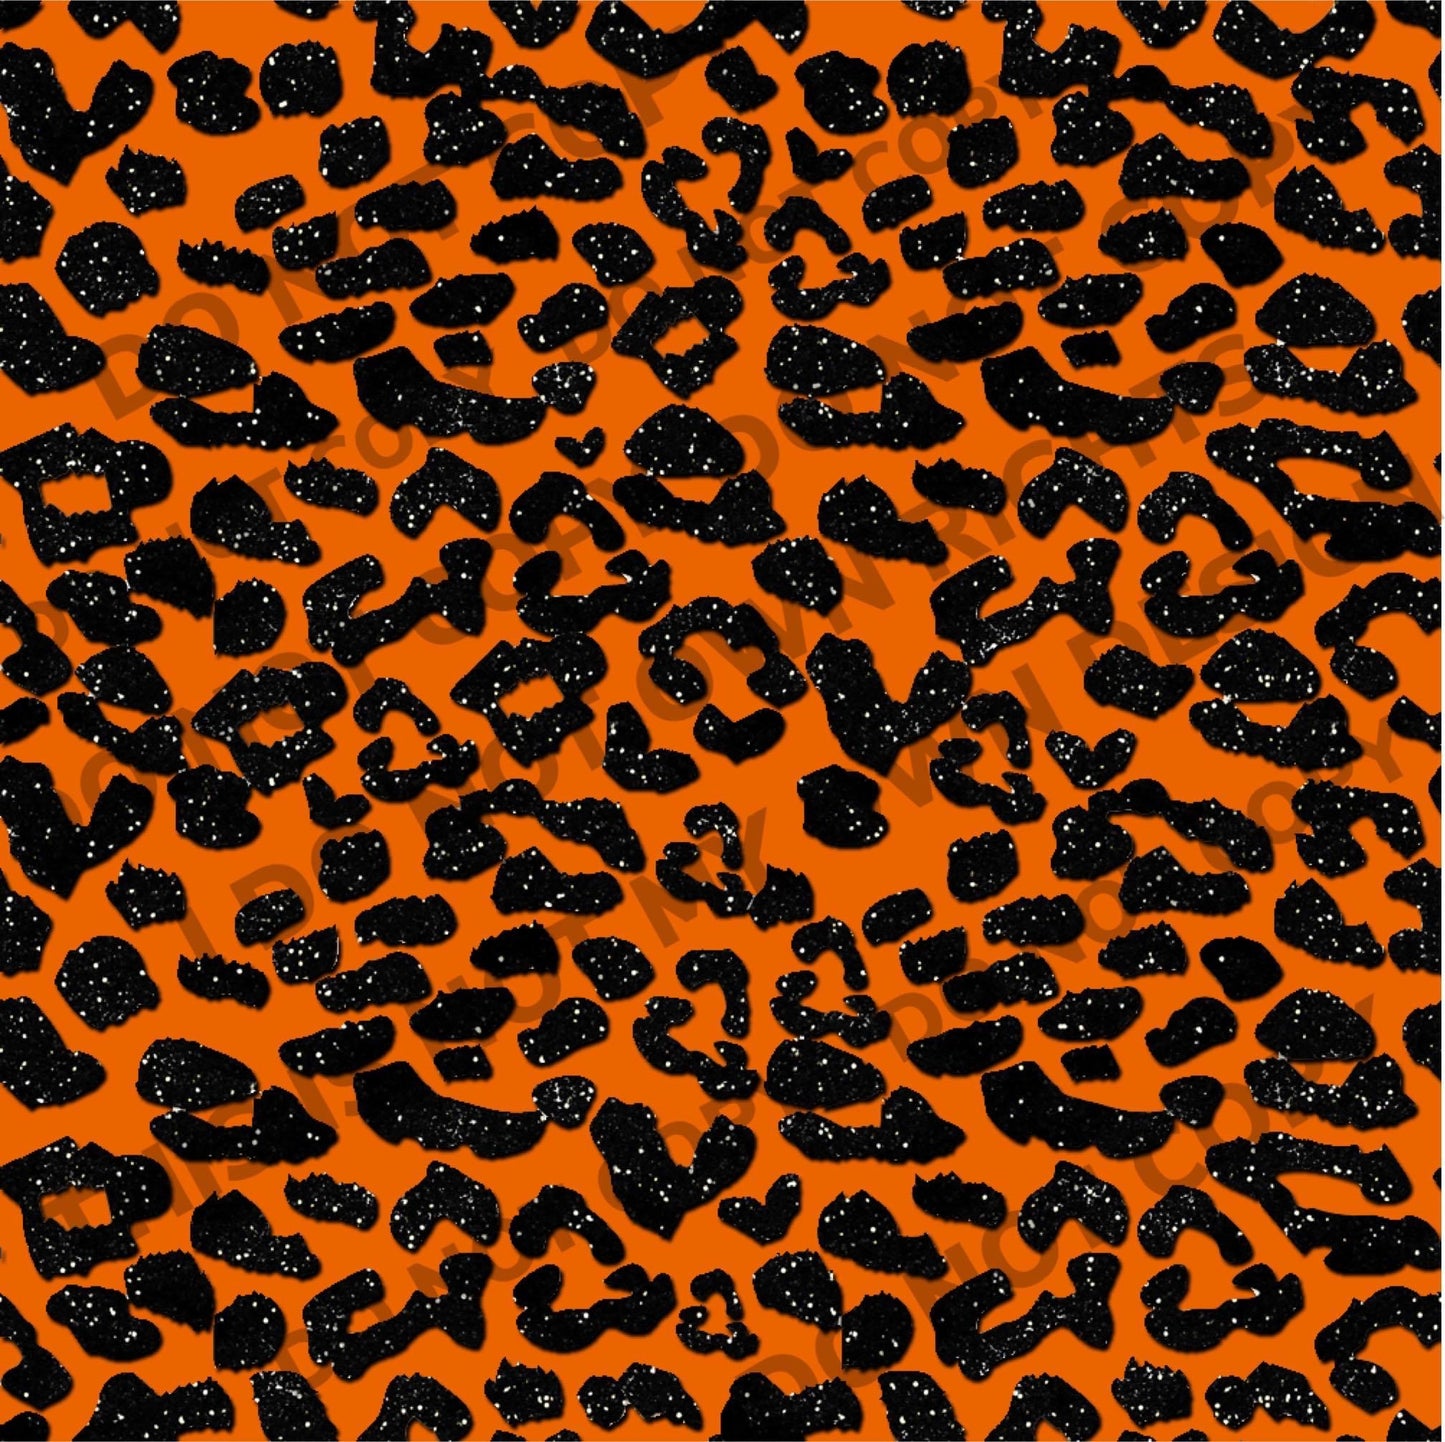 Orange Cheetah Printed Fabric Ribbed Knit/Bullet/DBP/Scuba/Leather